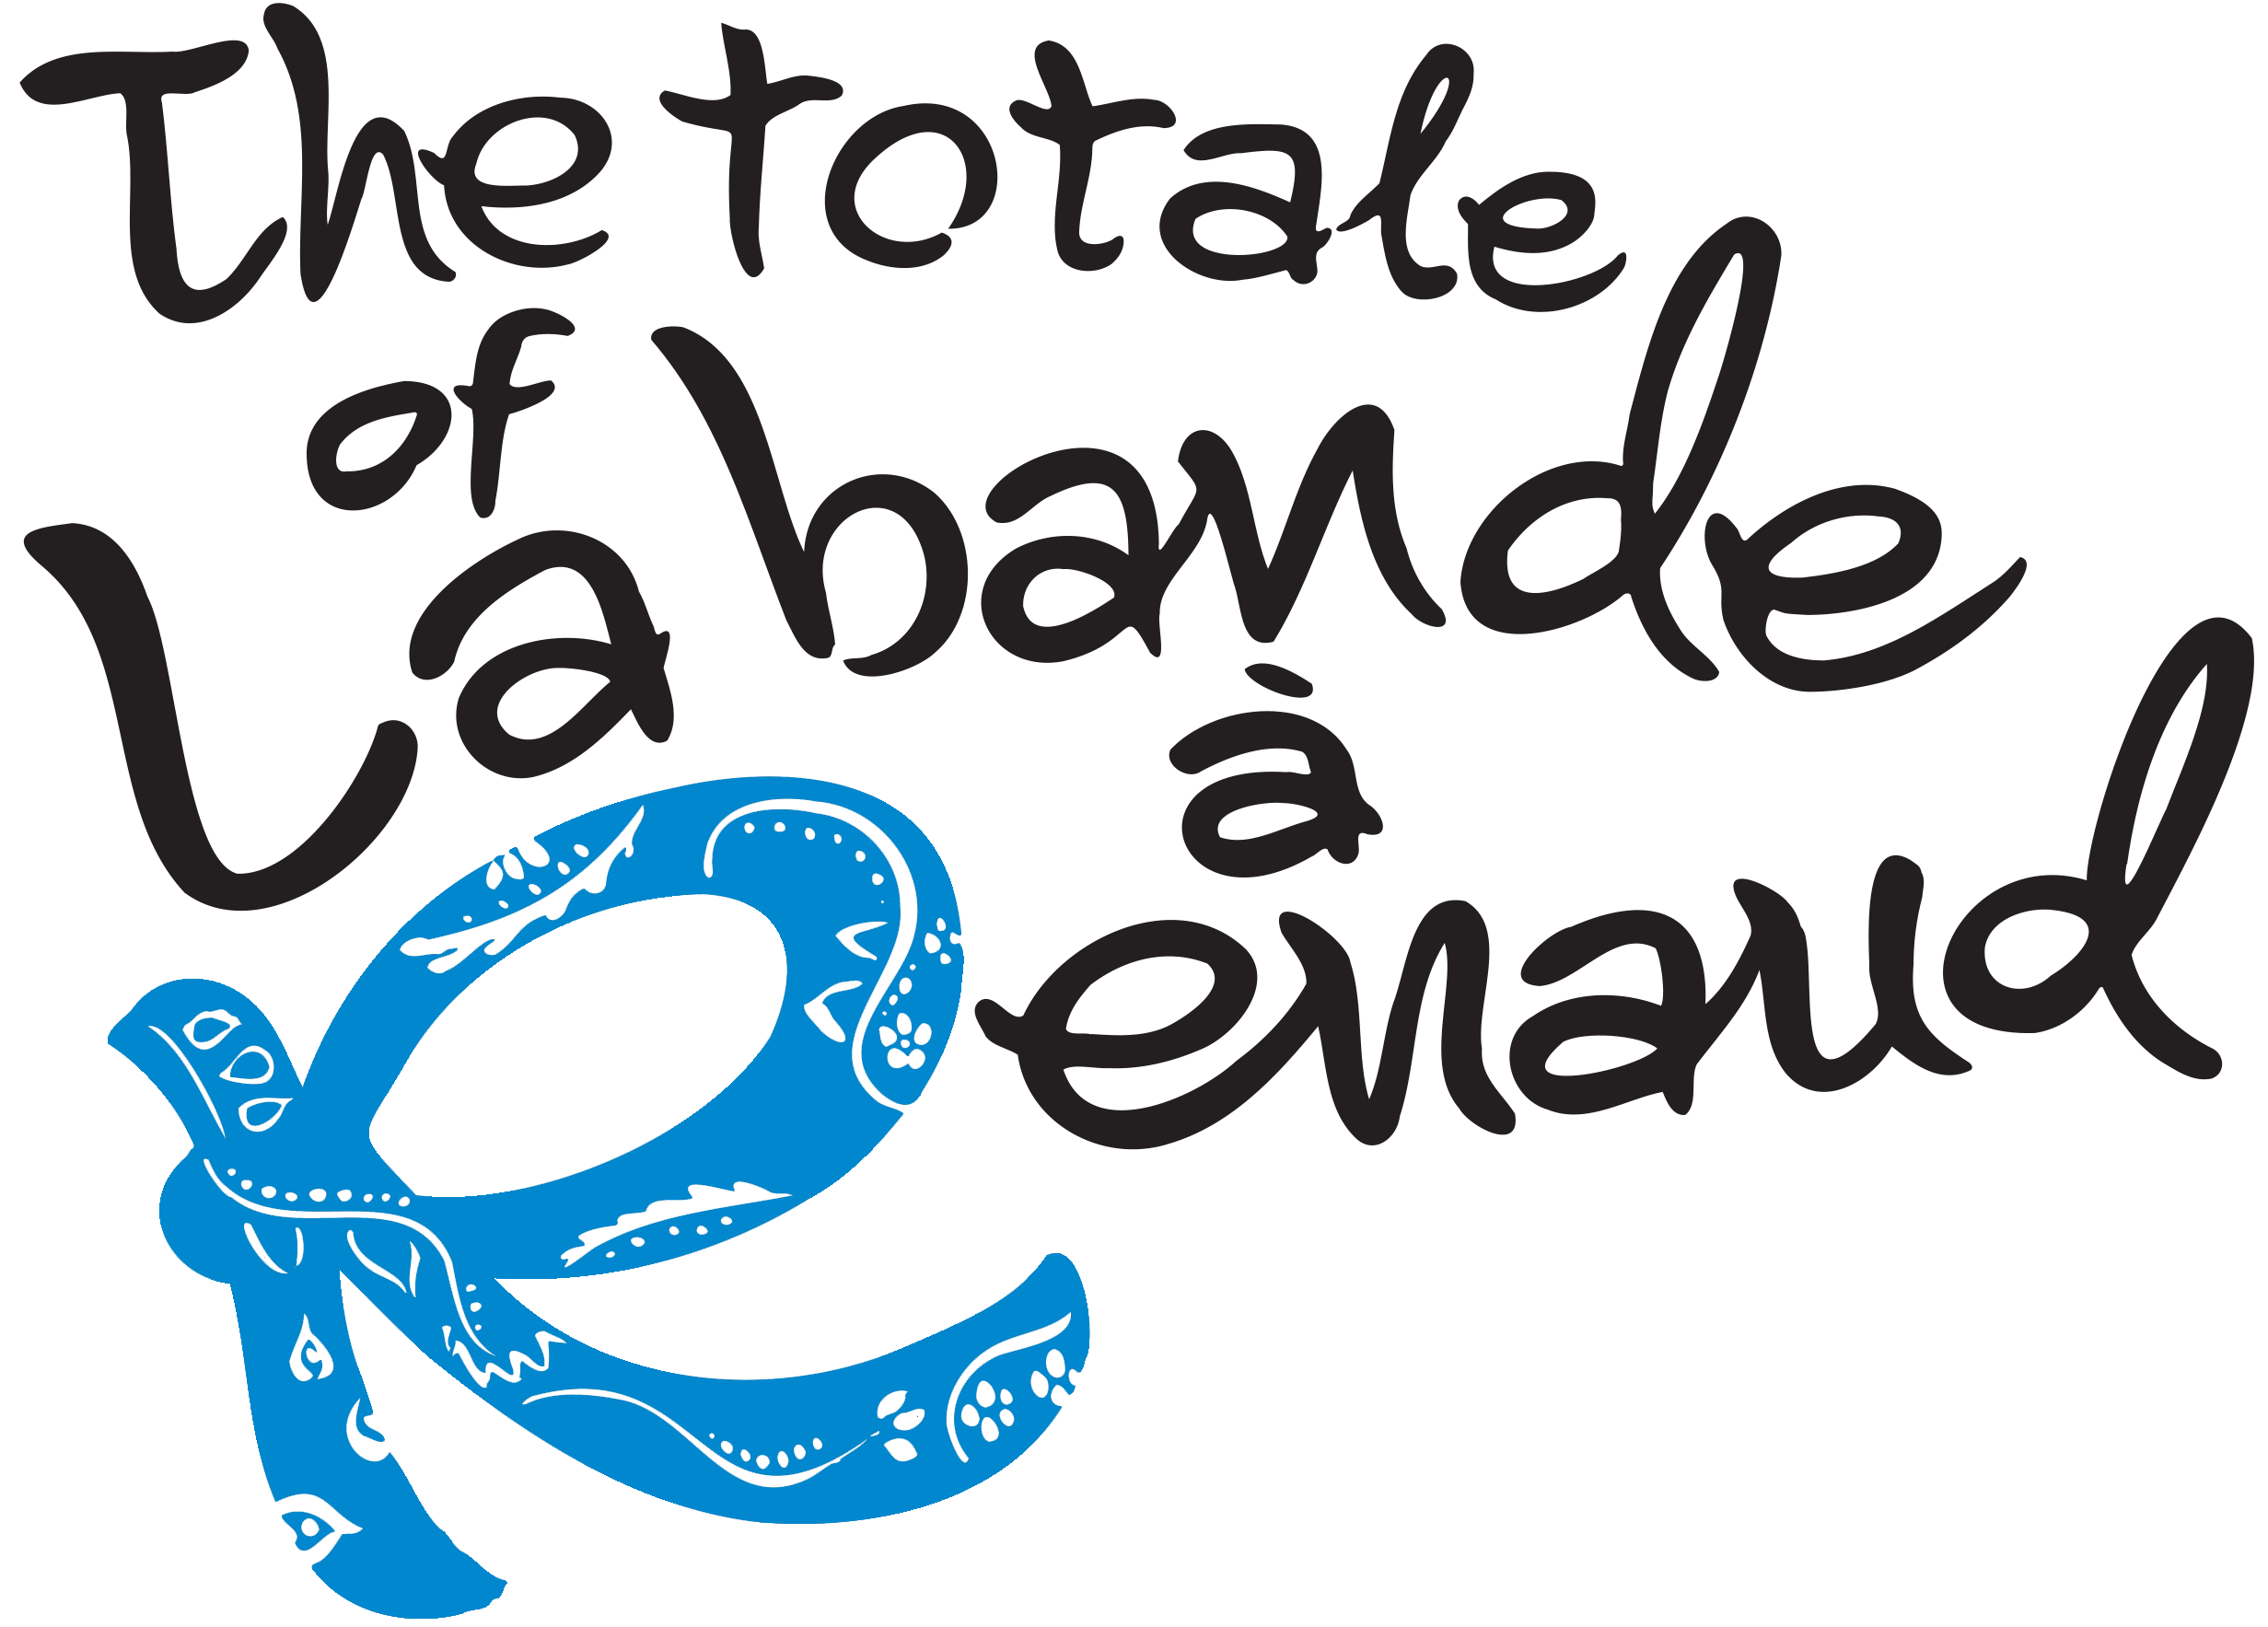 The totale of La bande à Renaud